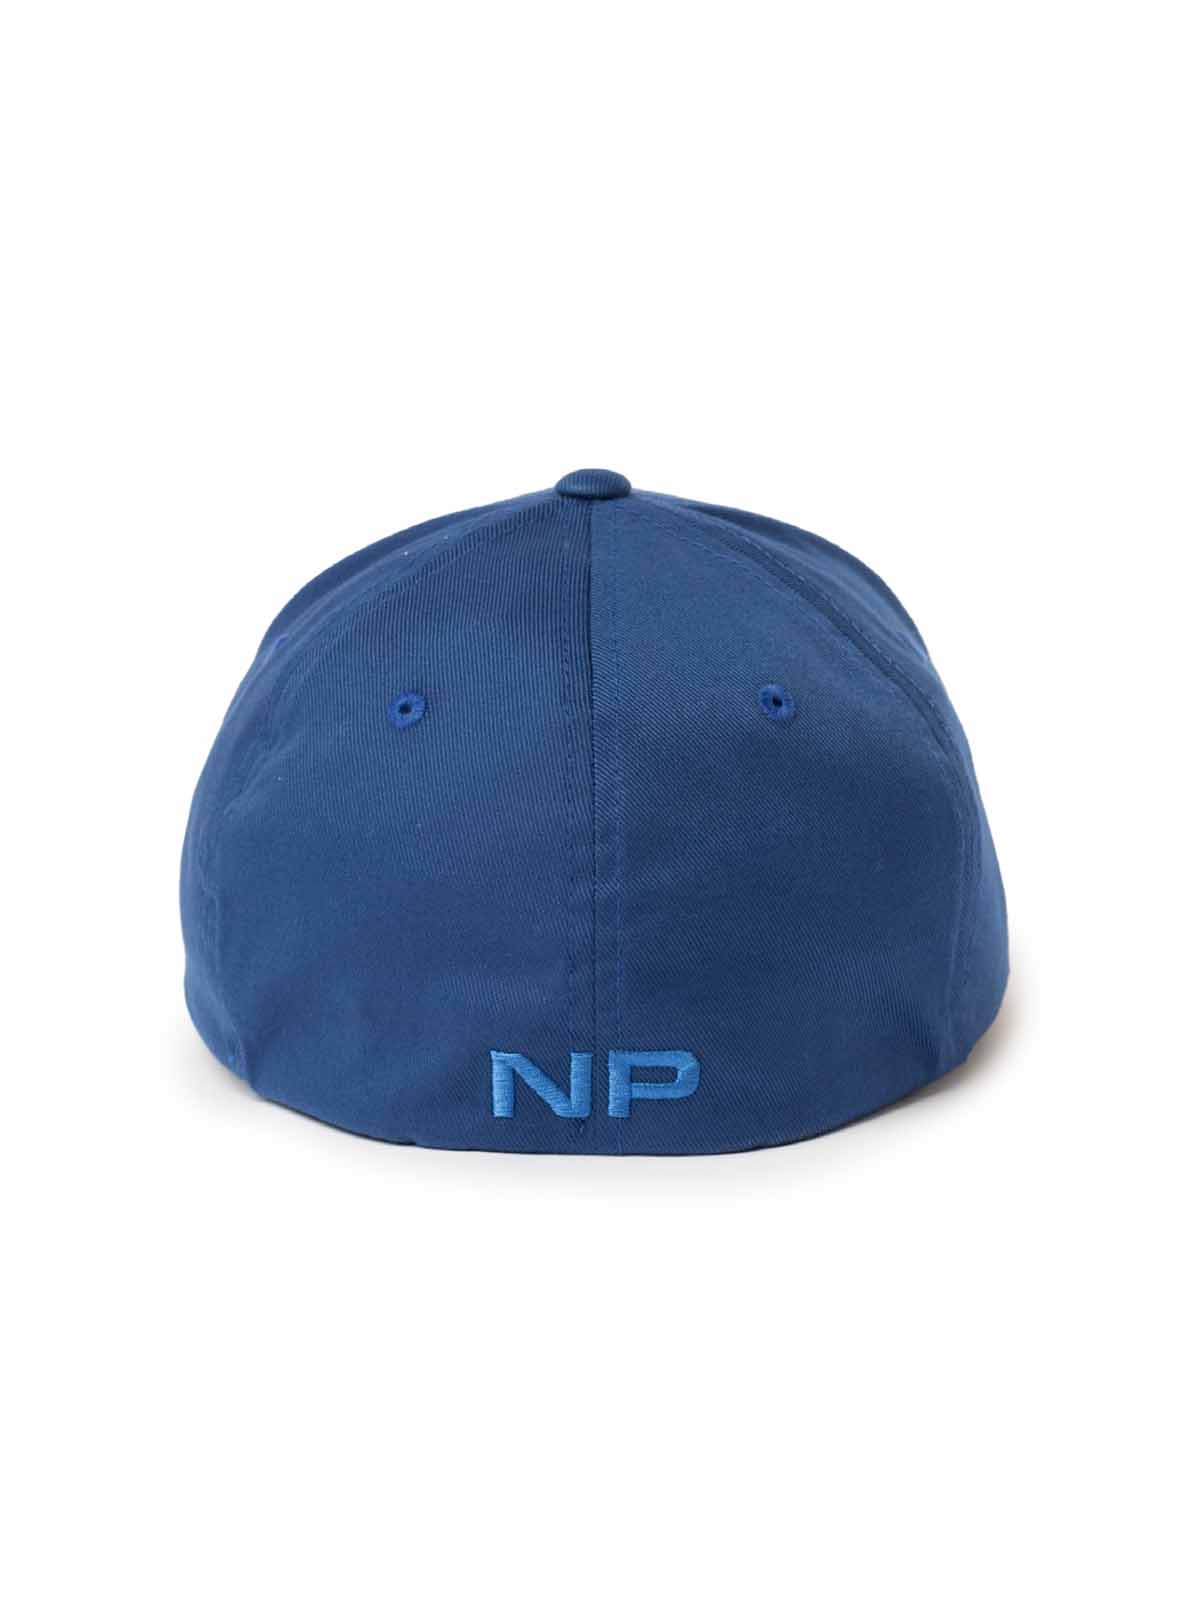 Nasty Pig Snout Cap 3.0 prince blue - Fullkit.com